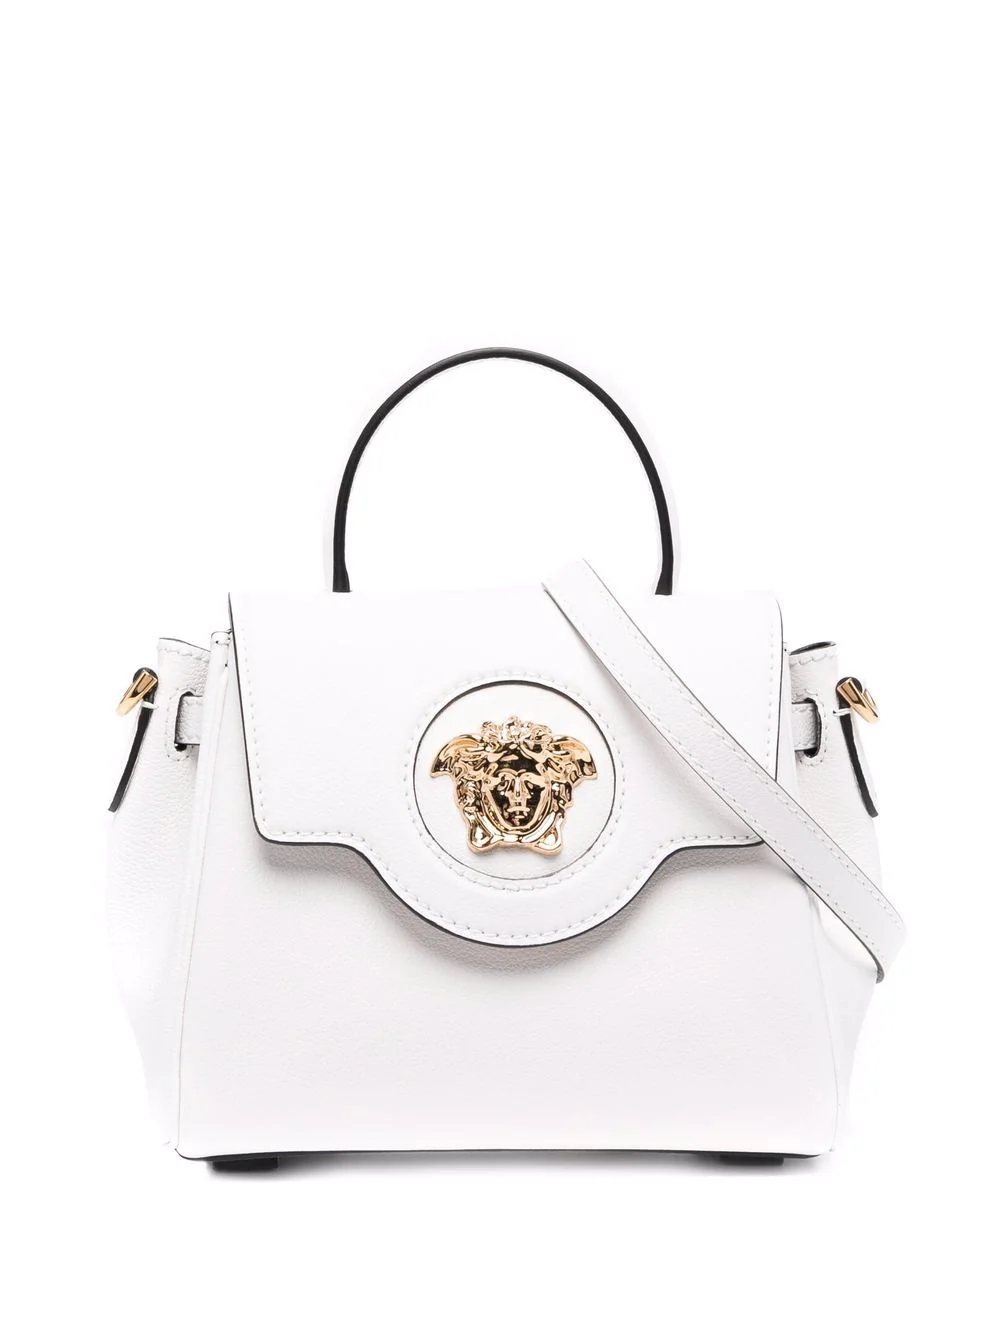 New arrivals Versace bags 2021 women's accessories